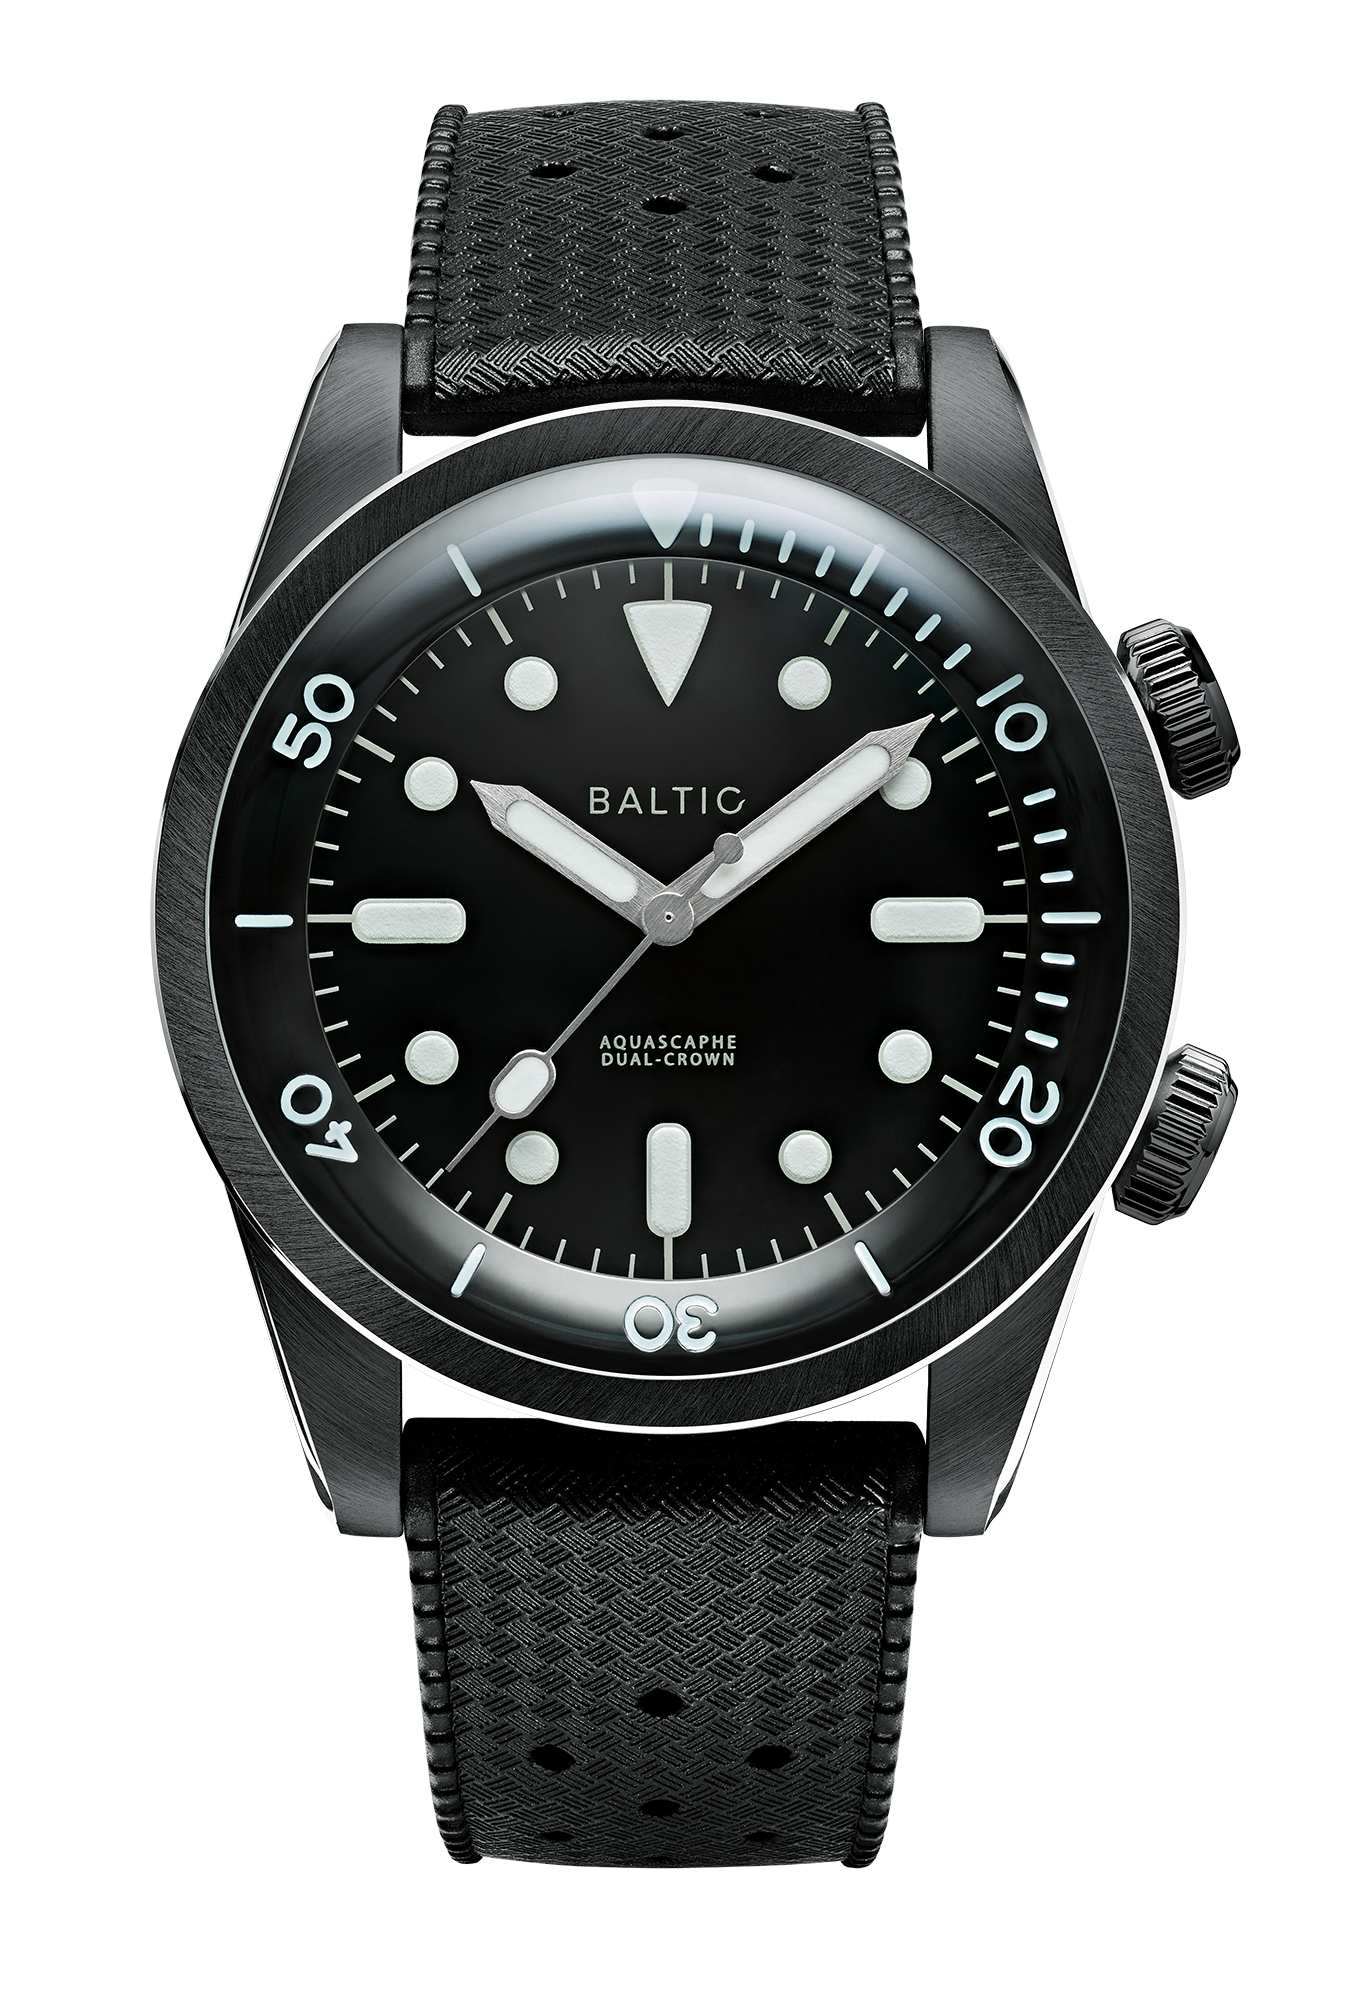 Aquascaphe Dual-Crown Black - Baltic Watches